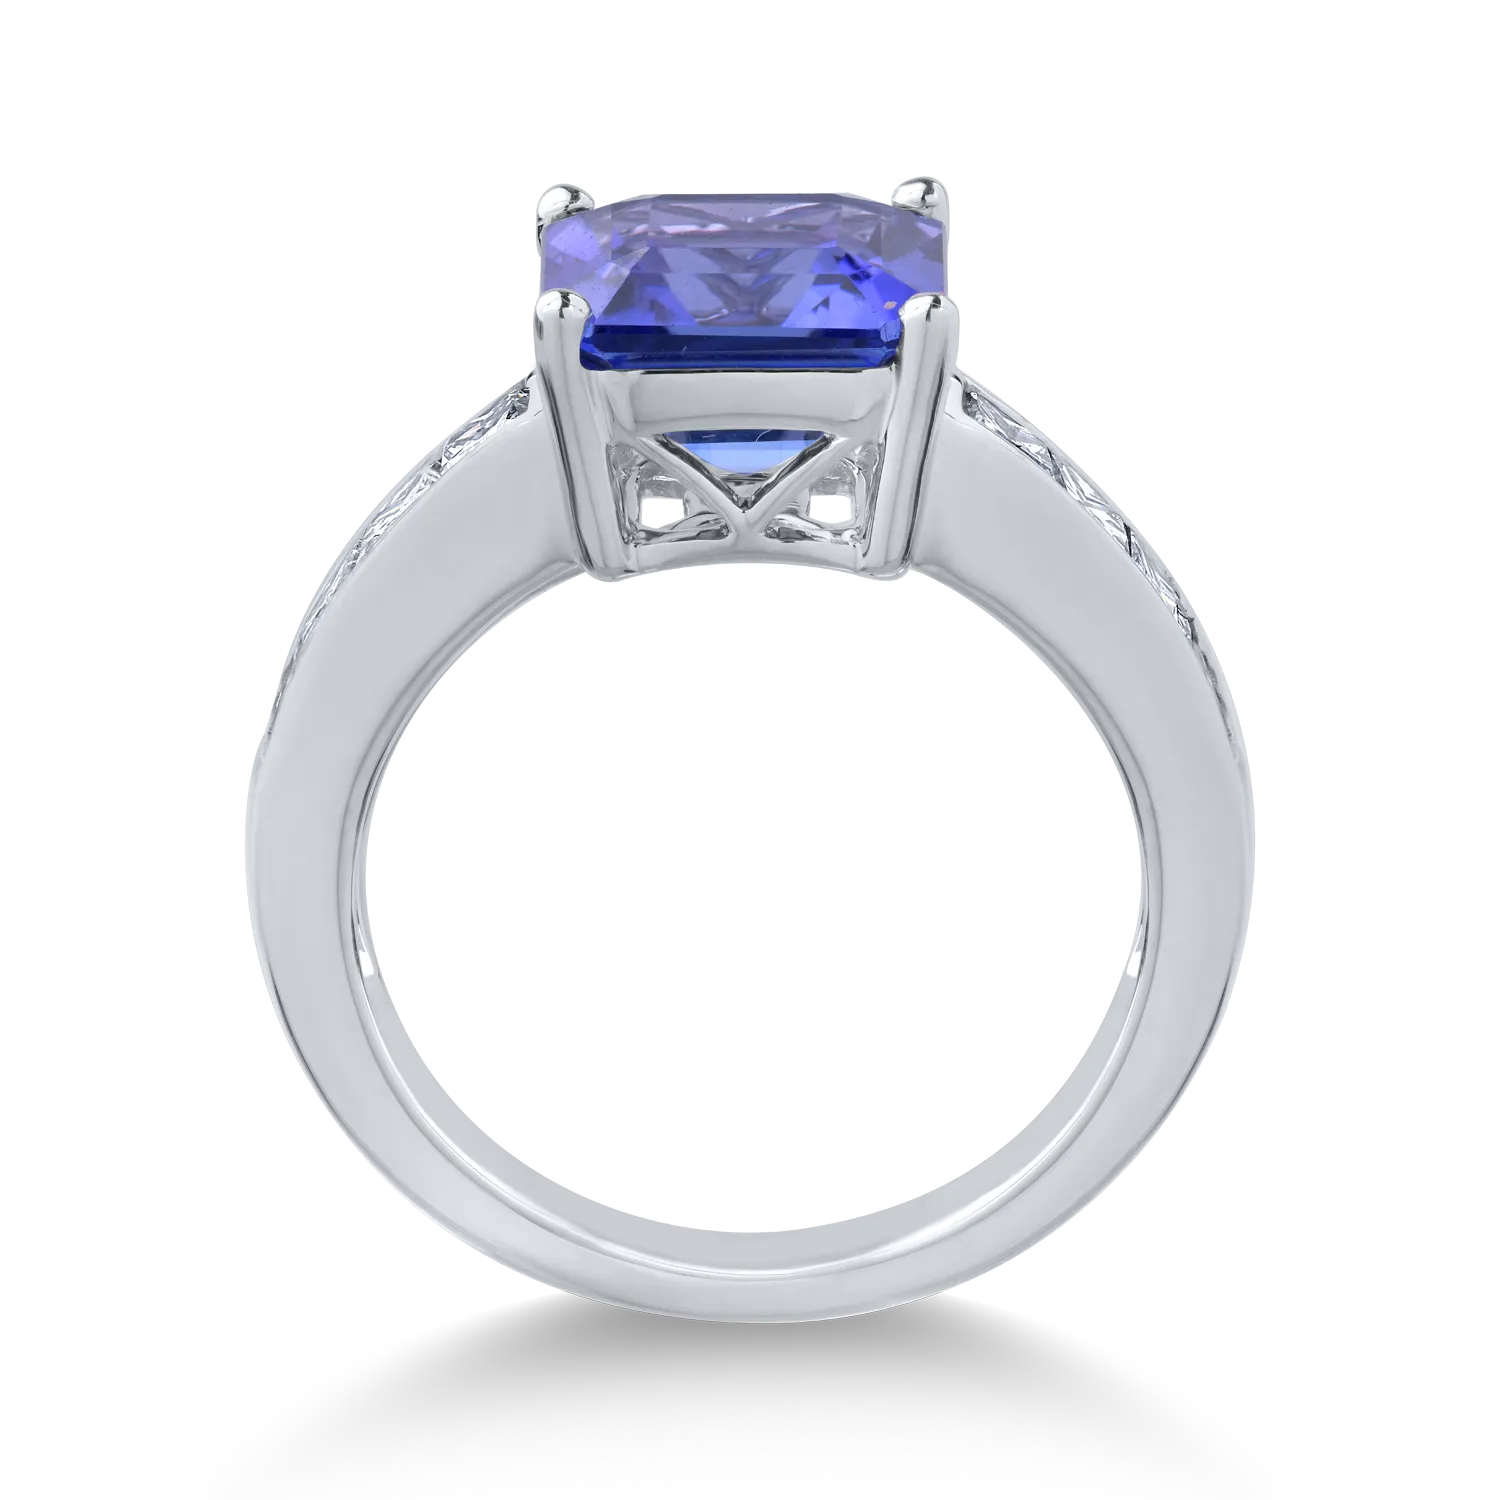 18K white gold ring with 3.64ct tanzanite and 0.19ct diamonds